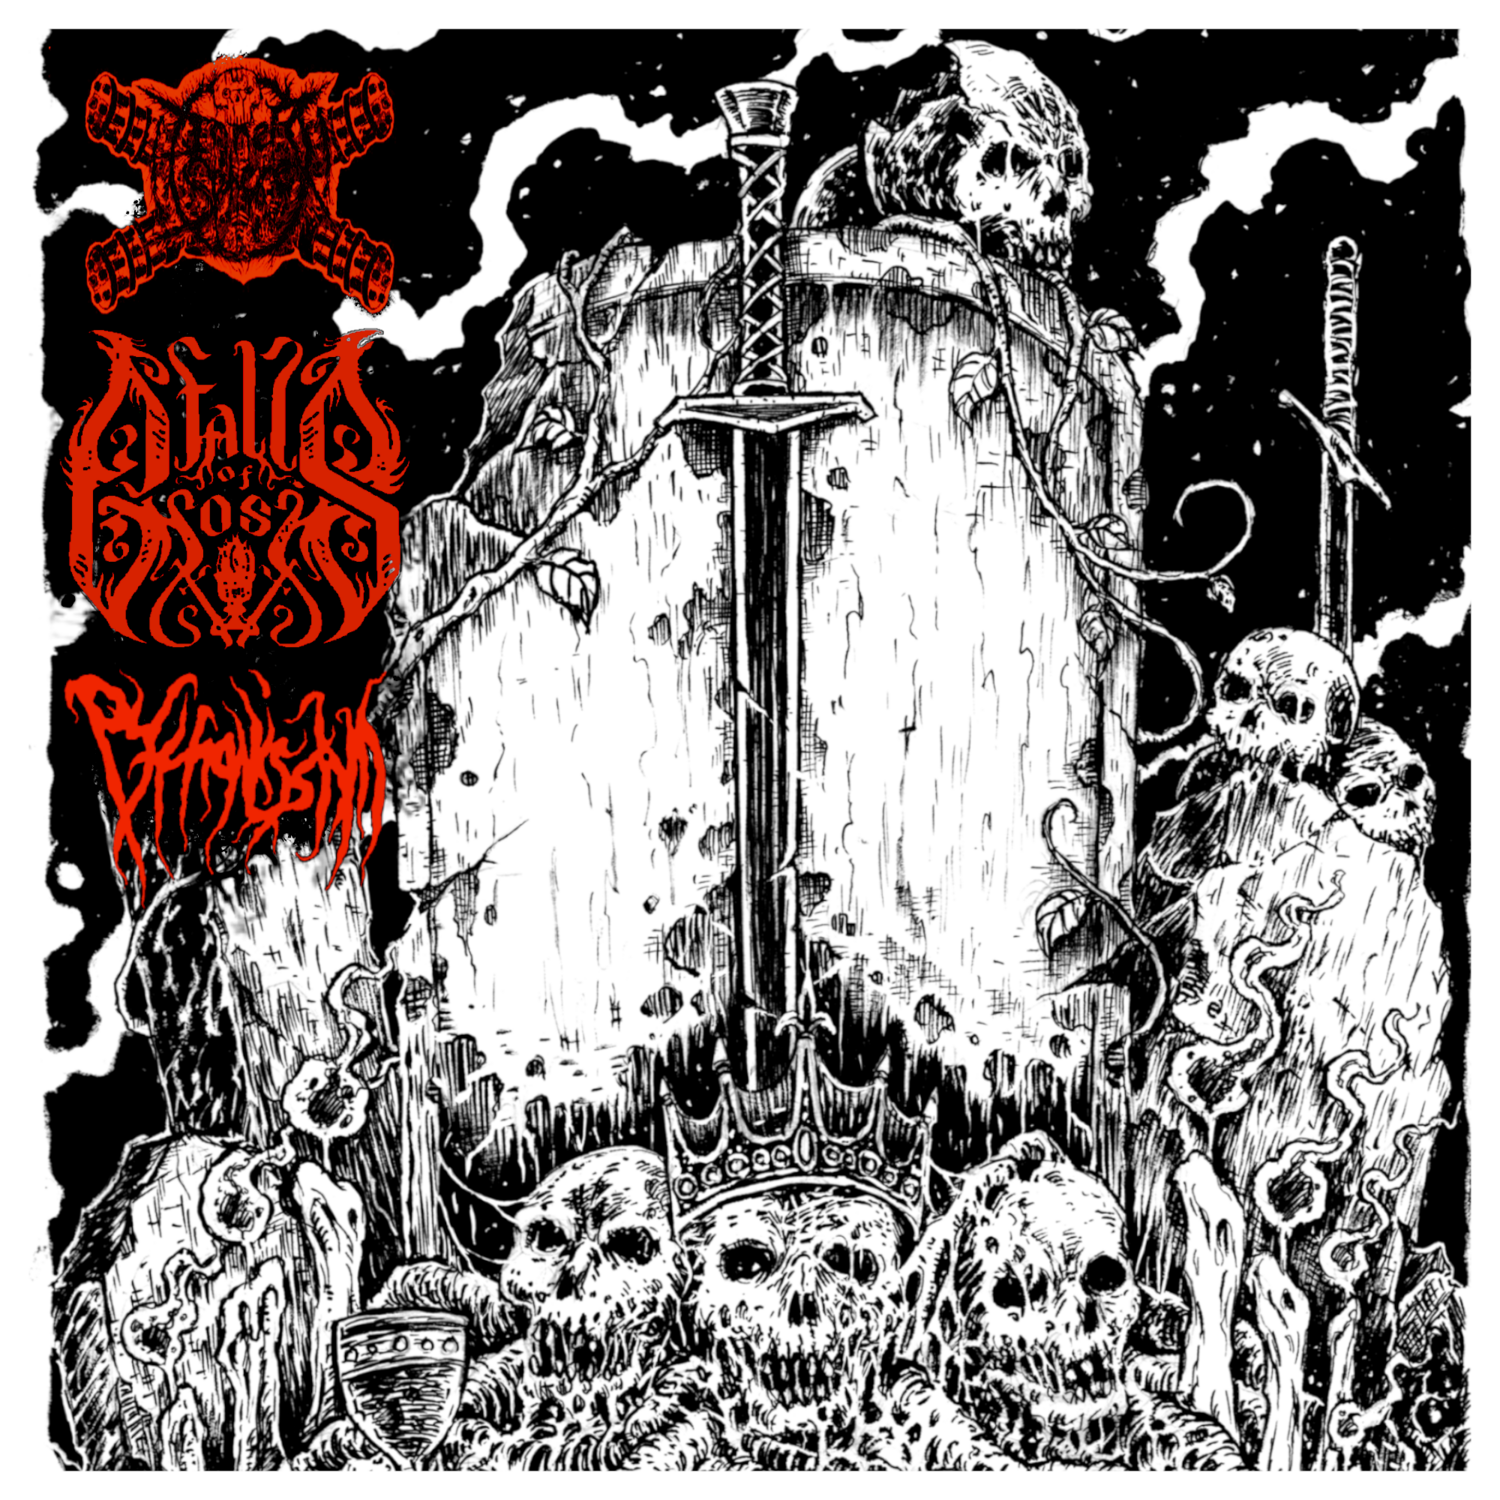 Inner Sphere / Fall of Gnosis / Pythonissam - Imperishable Realm | Death Doom Metal Split CD